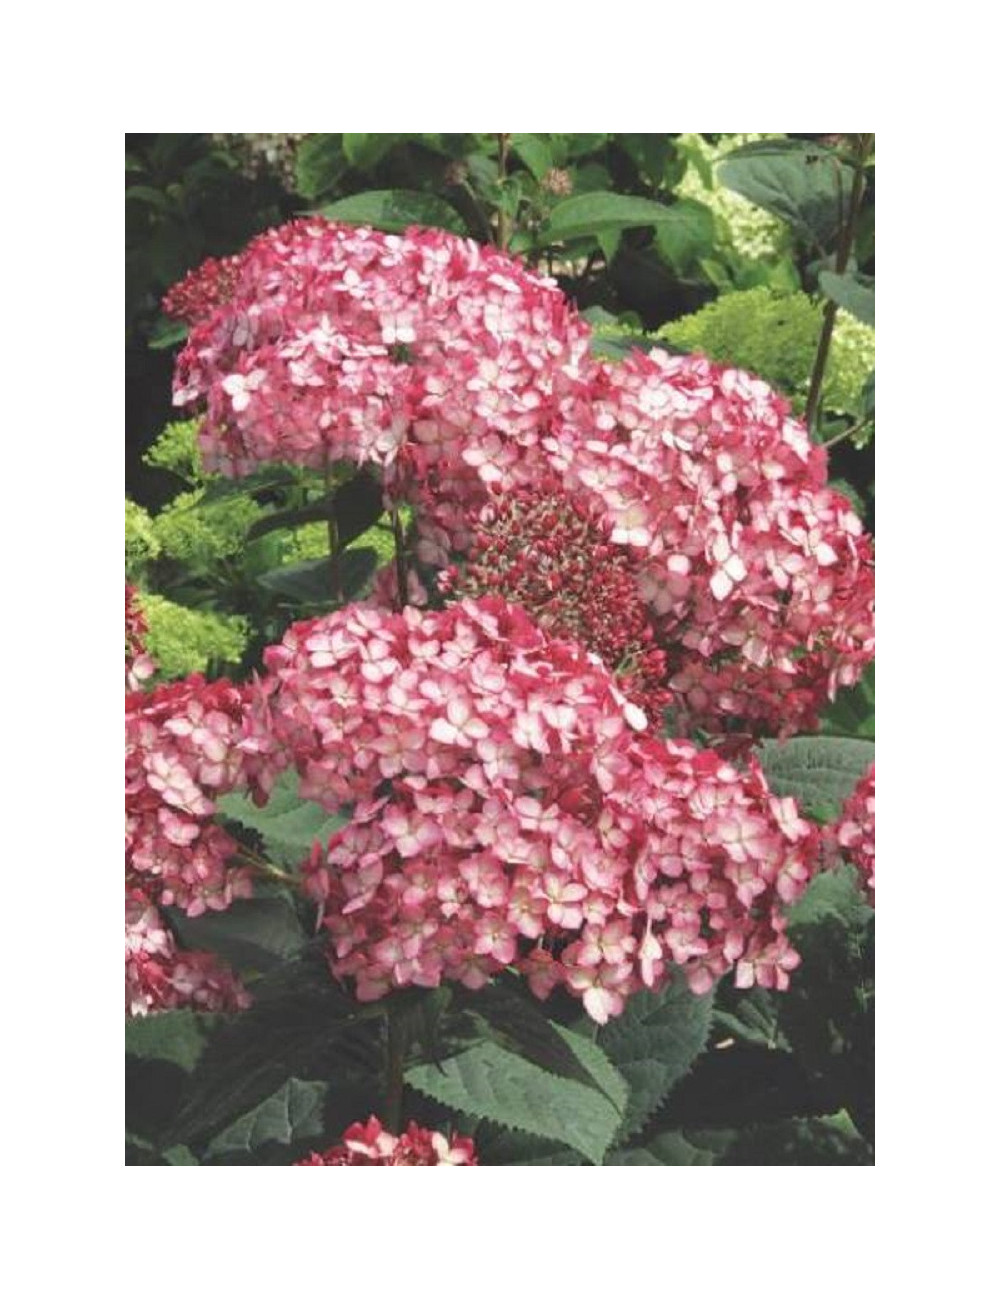 HYDRANGEA arborescens PW ® RUBY ANNABELLE ® (Hortensia arbustif)